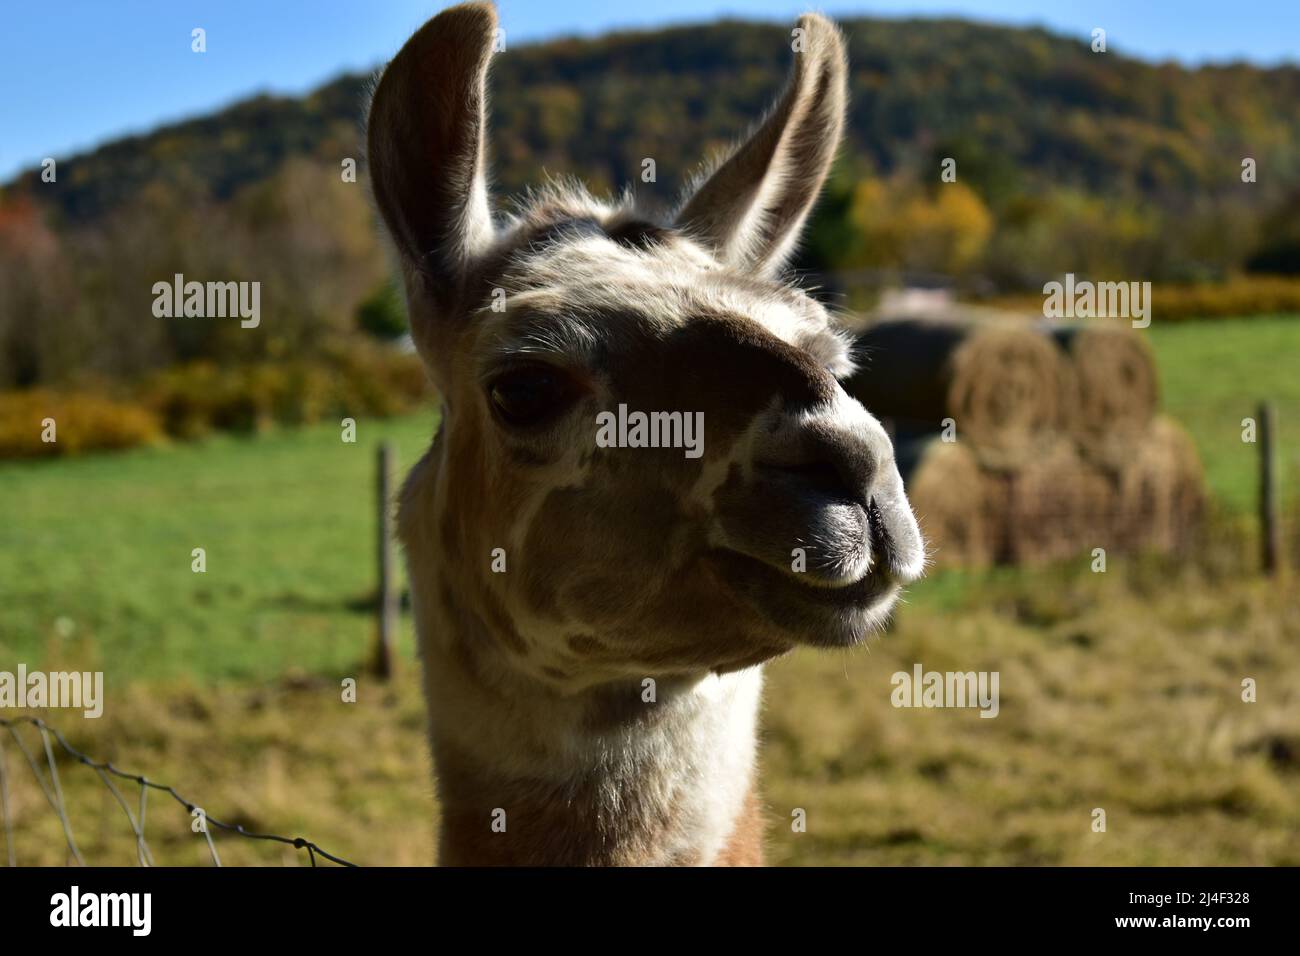 Lama, Llama, Alpaca, Alpaka, Mammal, Cute, Fluffy, Andes, Chile, Autumn, Animal, Tranquil, Livestock, Wool, Farm Stock Photo